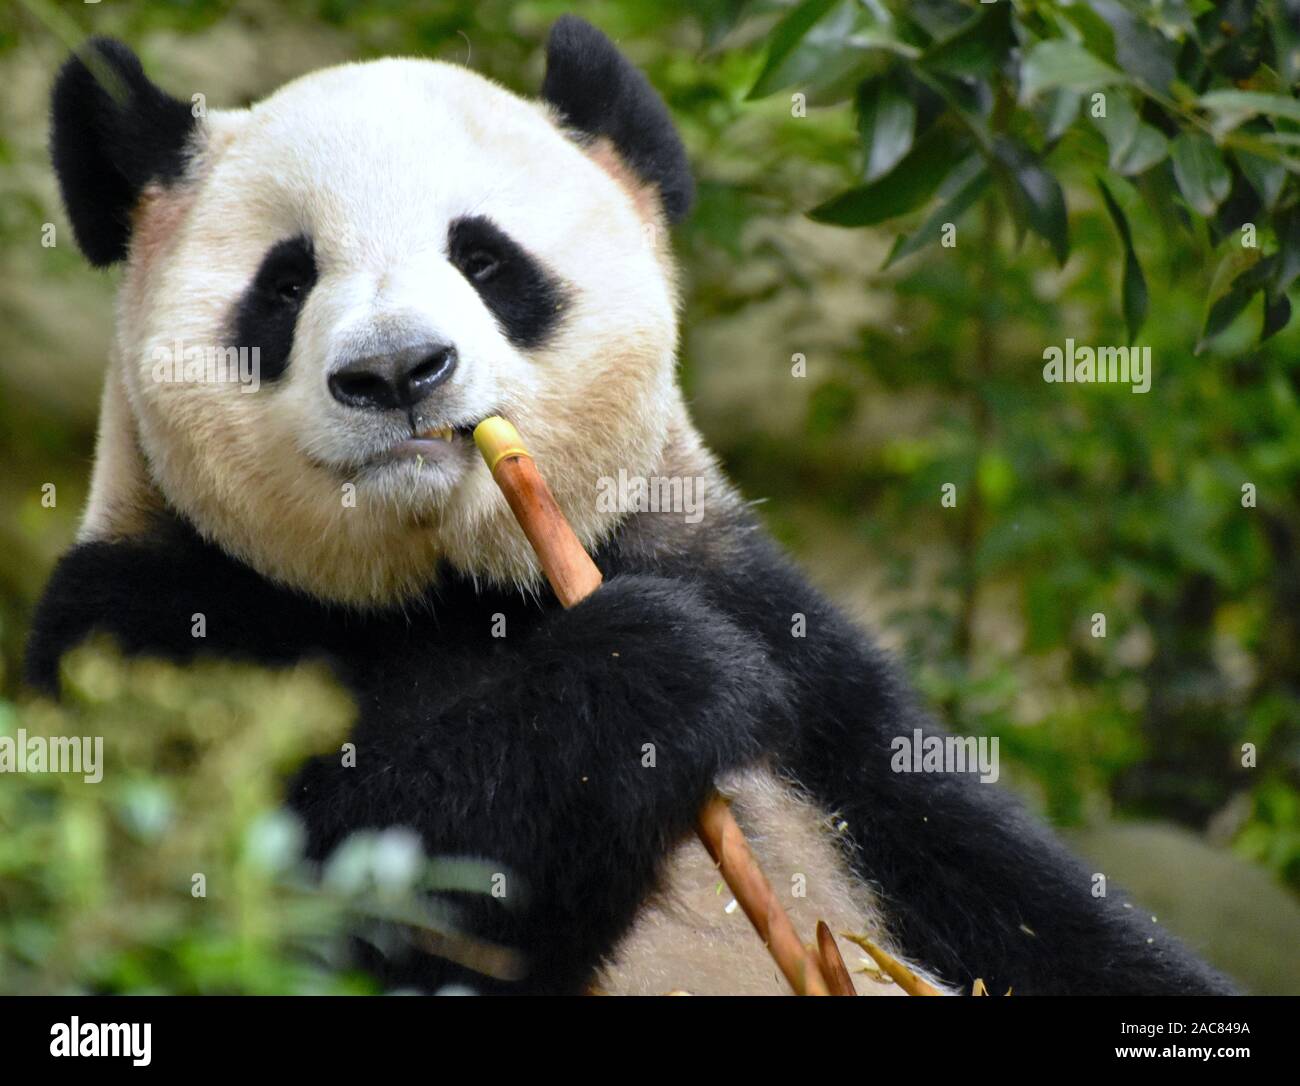 Lindo oso panda comiendo bambú en bosque, Chengdu, China Foto de stock